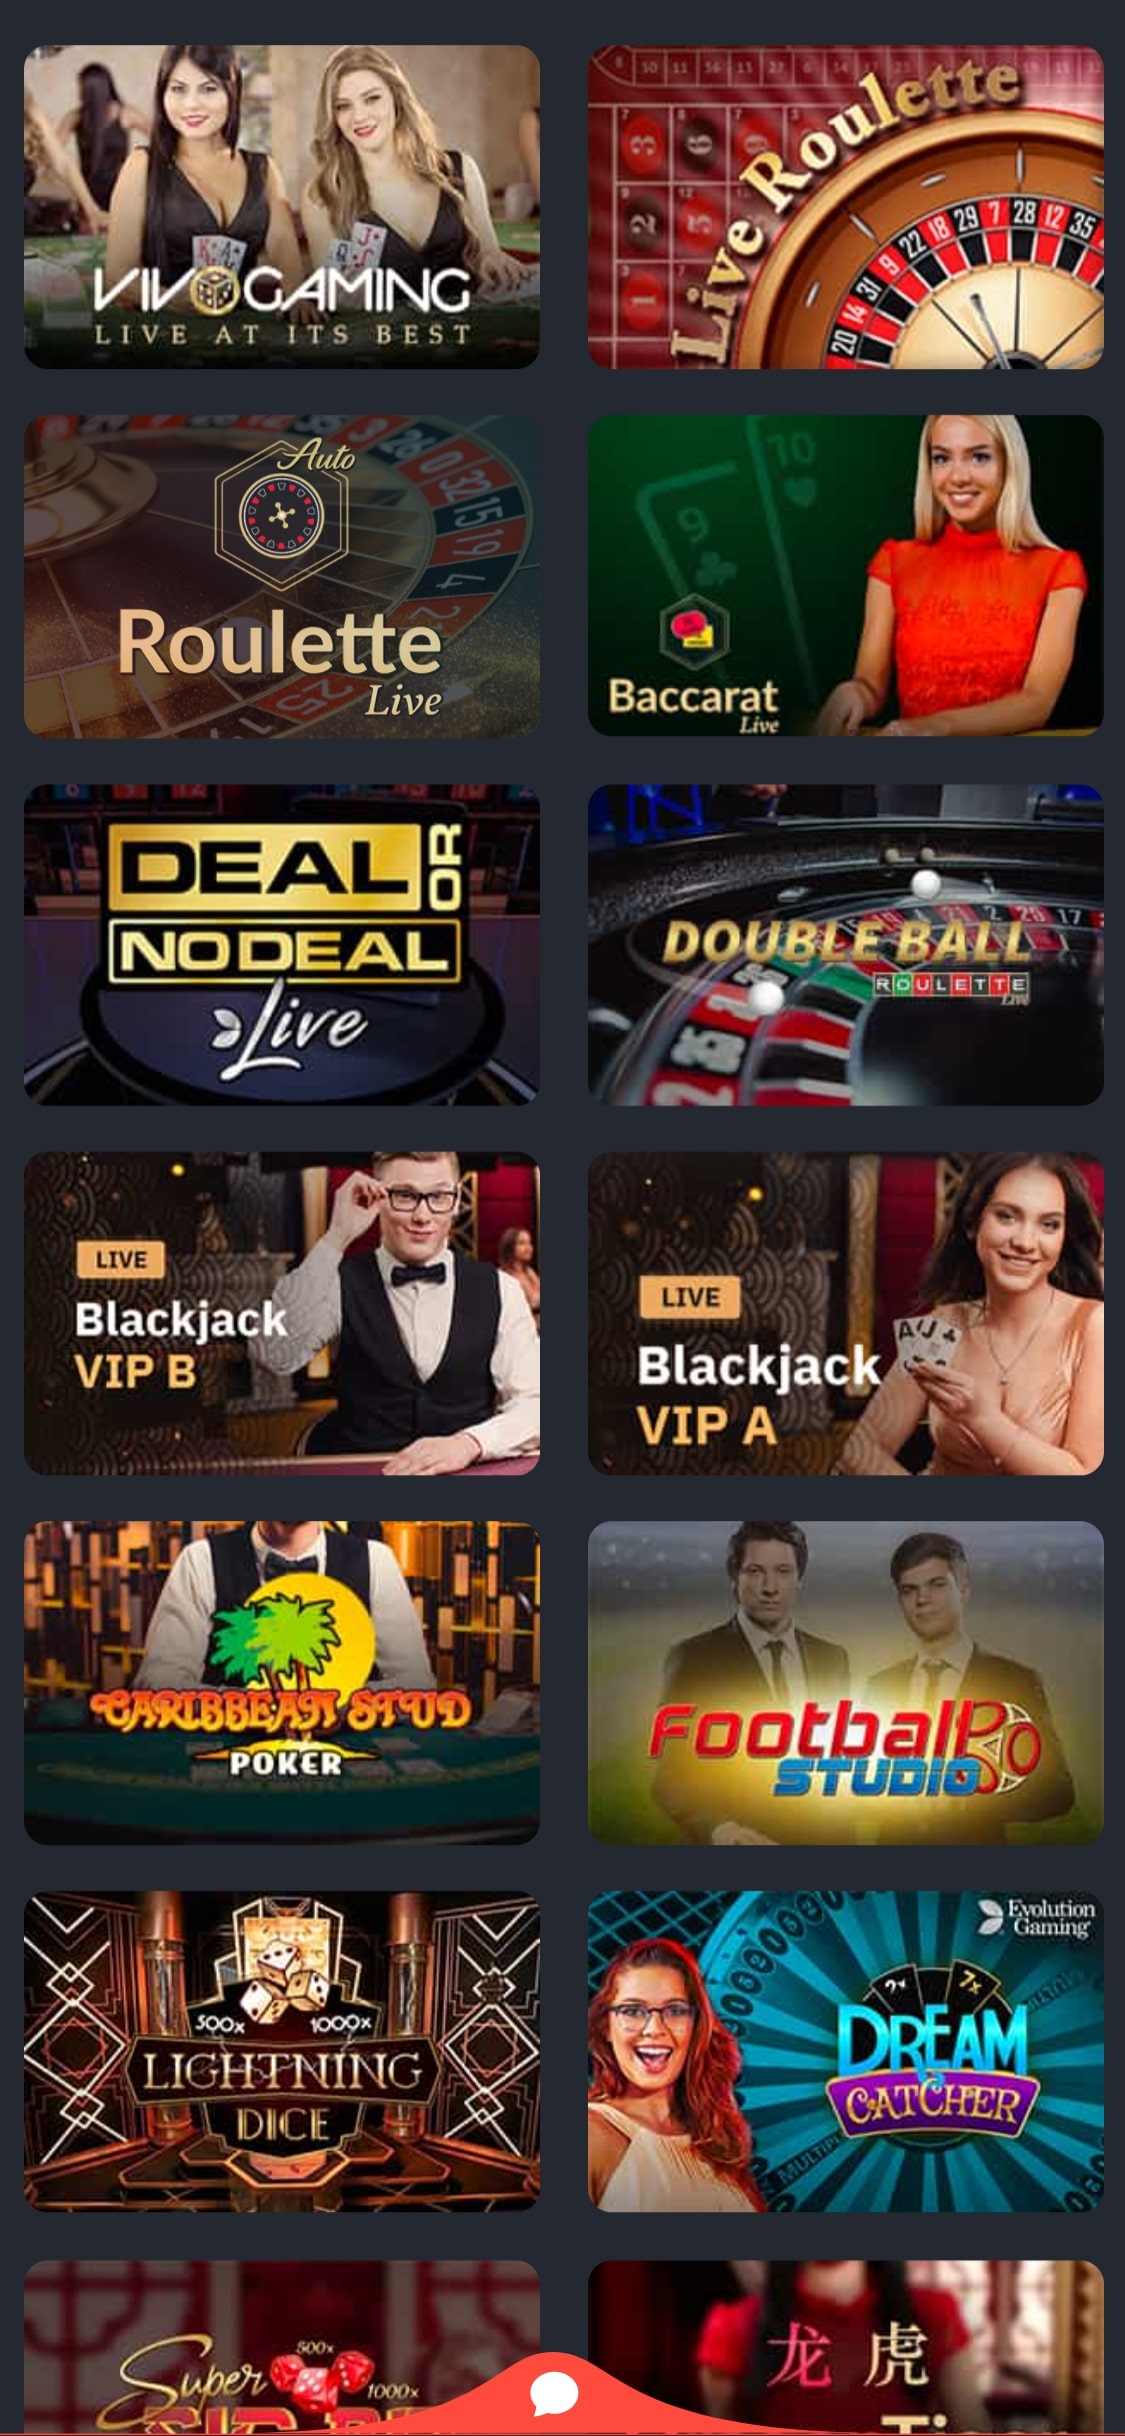 RichPrize Casino Mobile Live Dealer Games Review